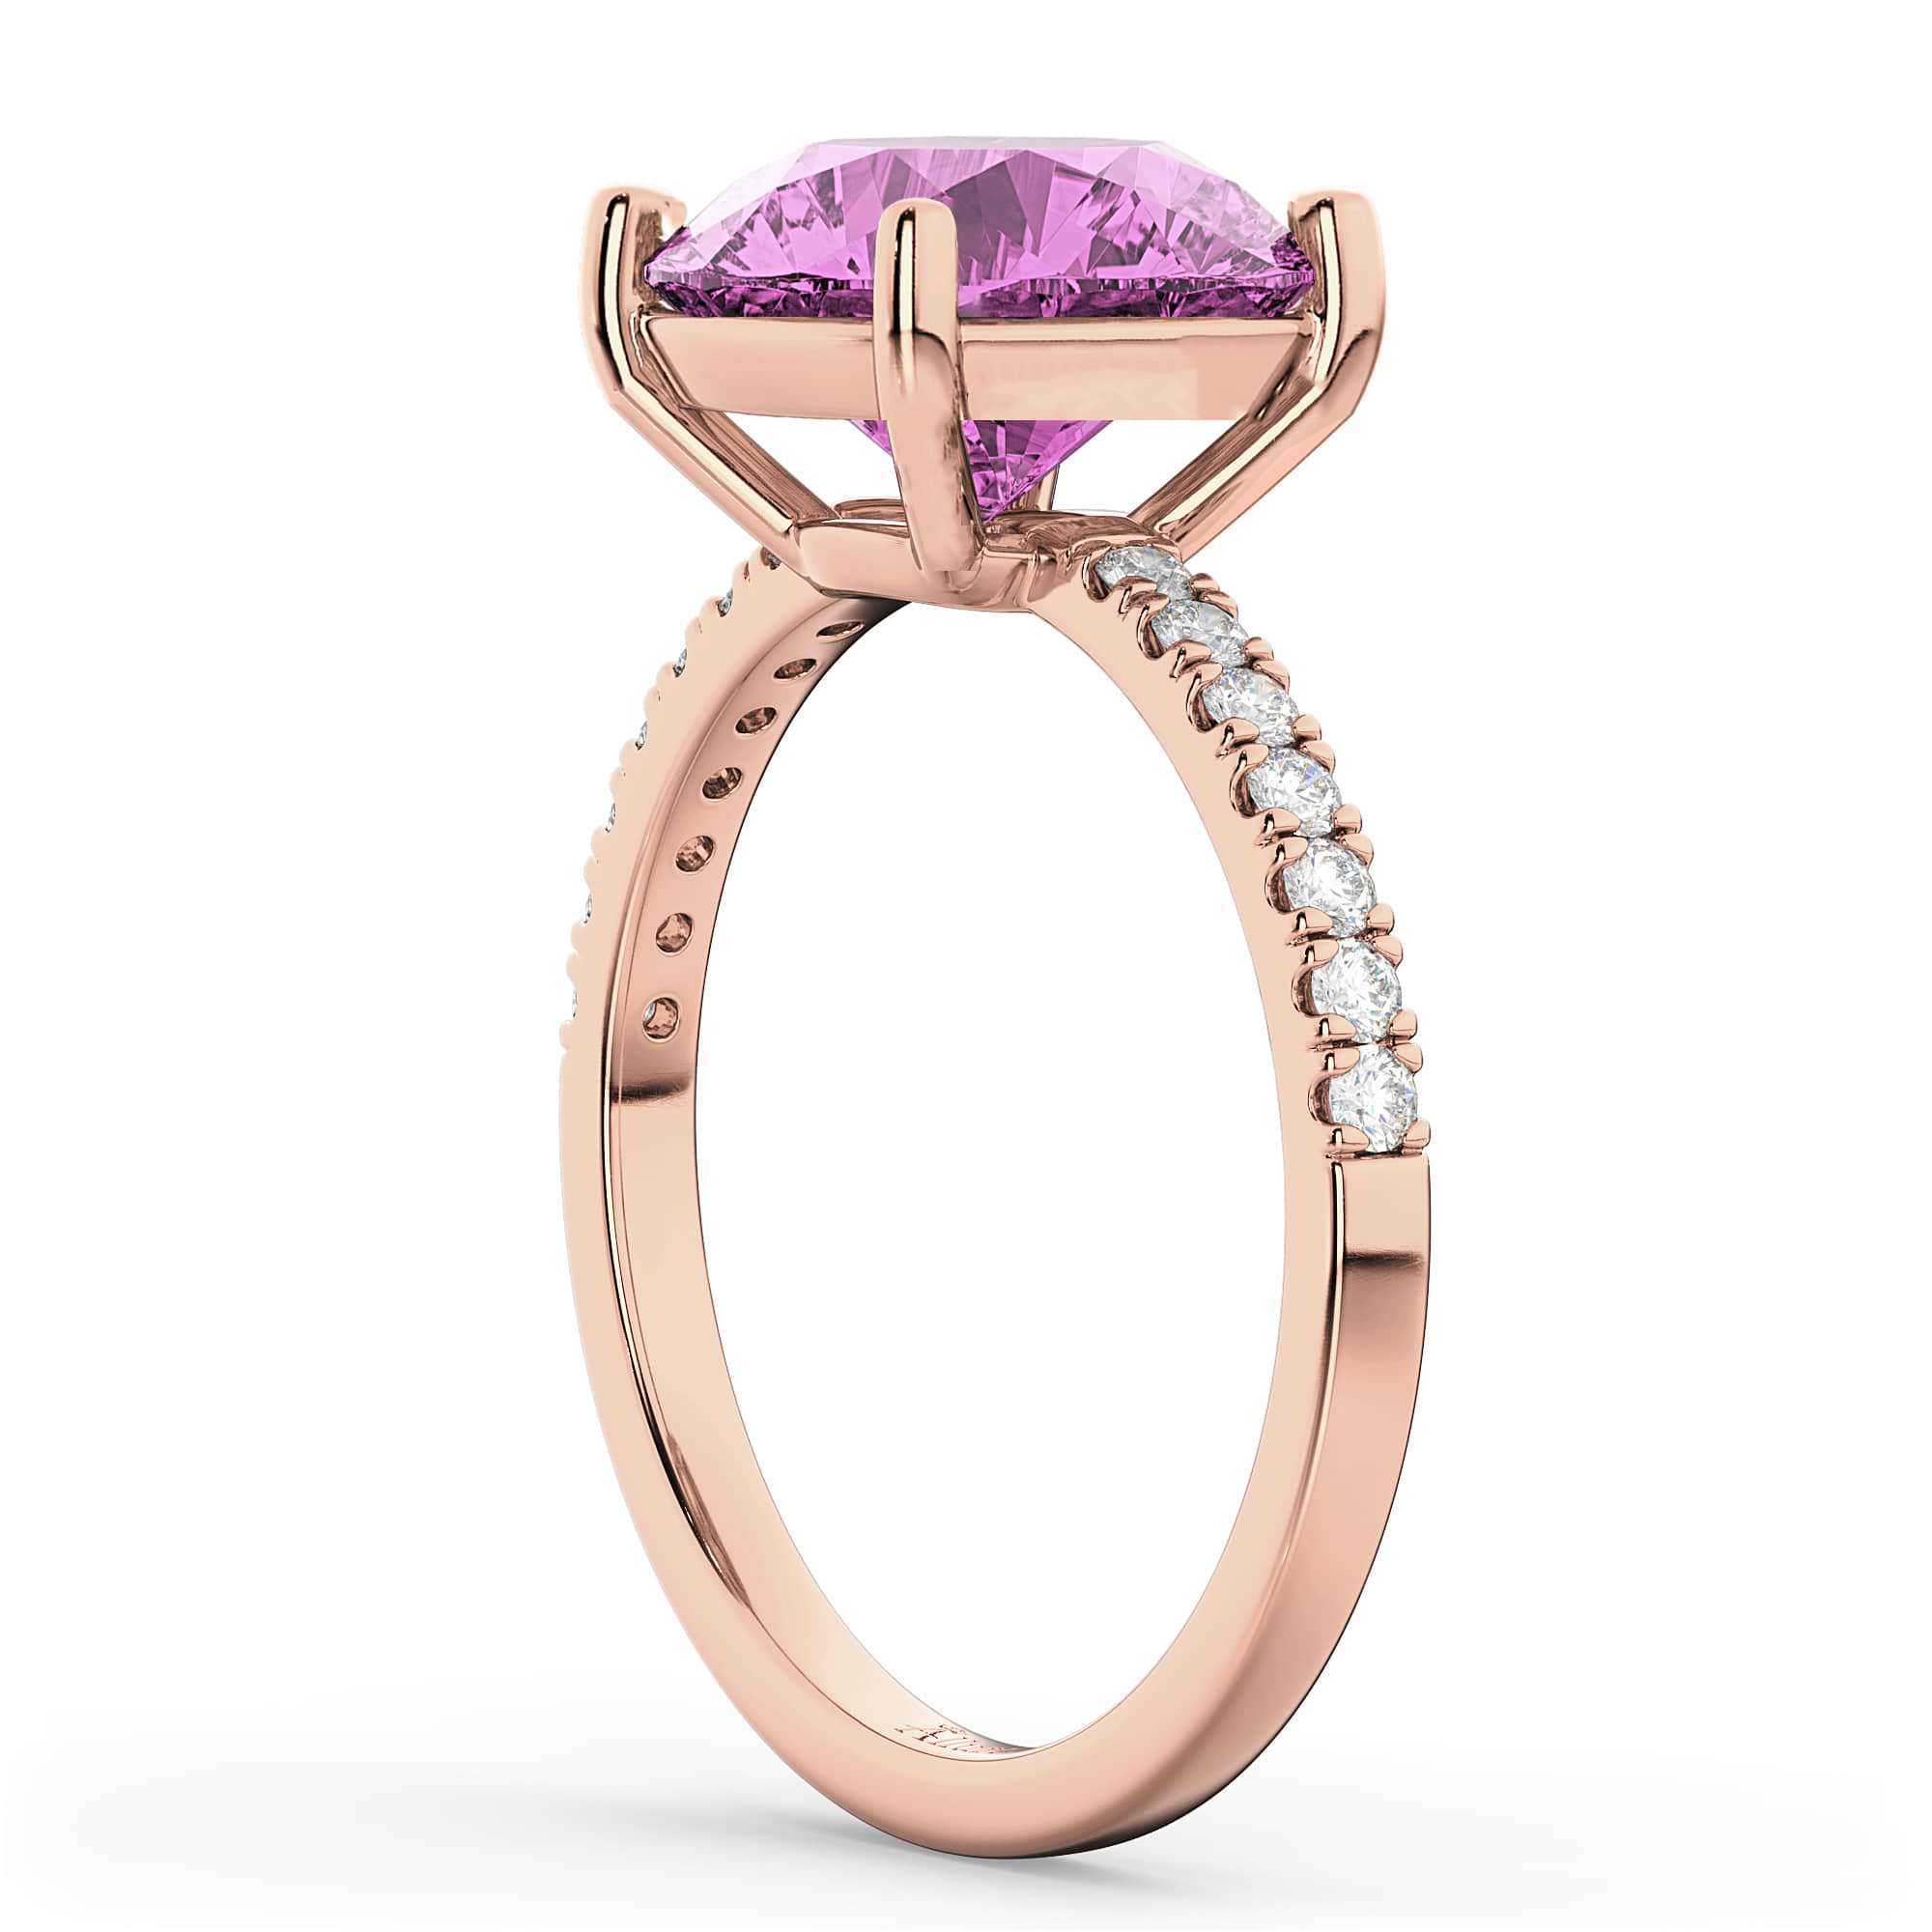 Pink Sapphire & Diamond Engagement Ring 14K Rose Gold 2.51ct